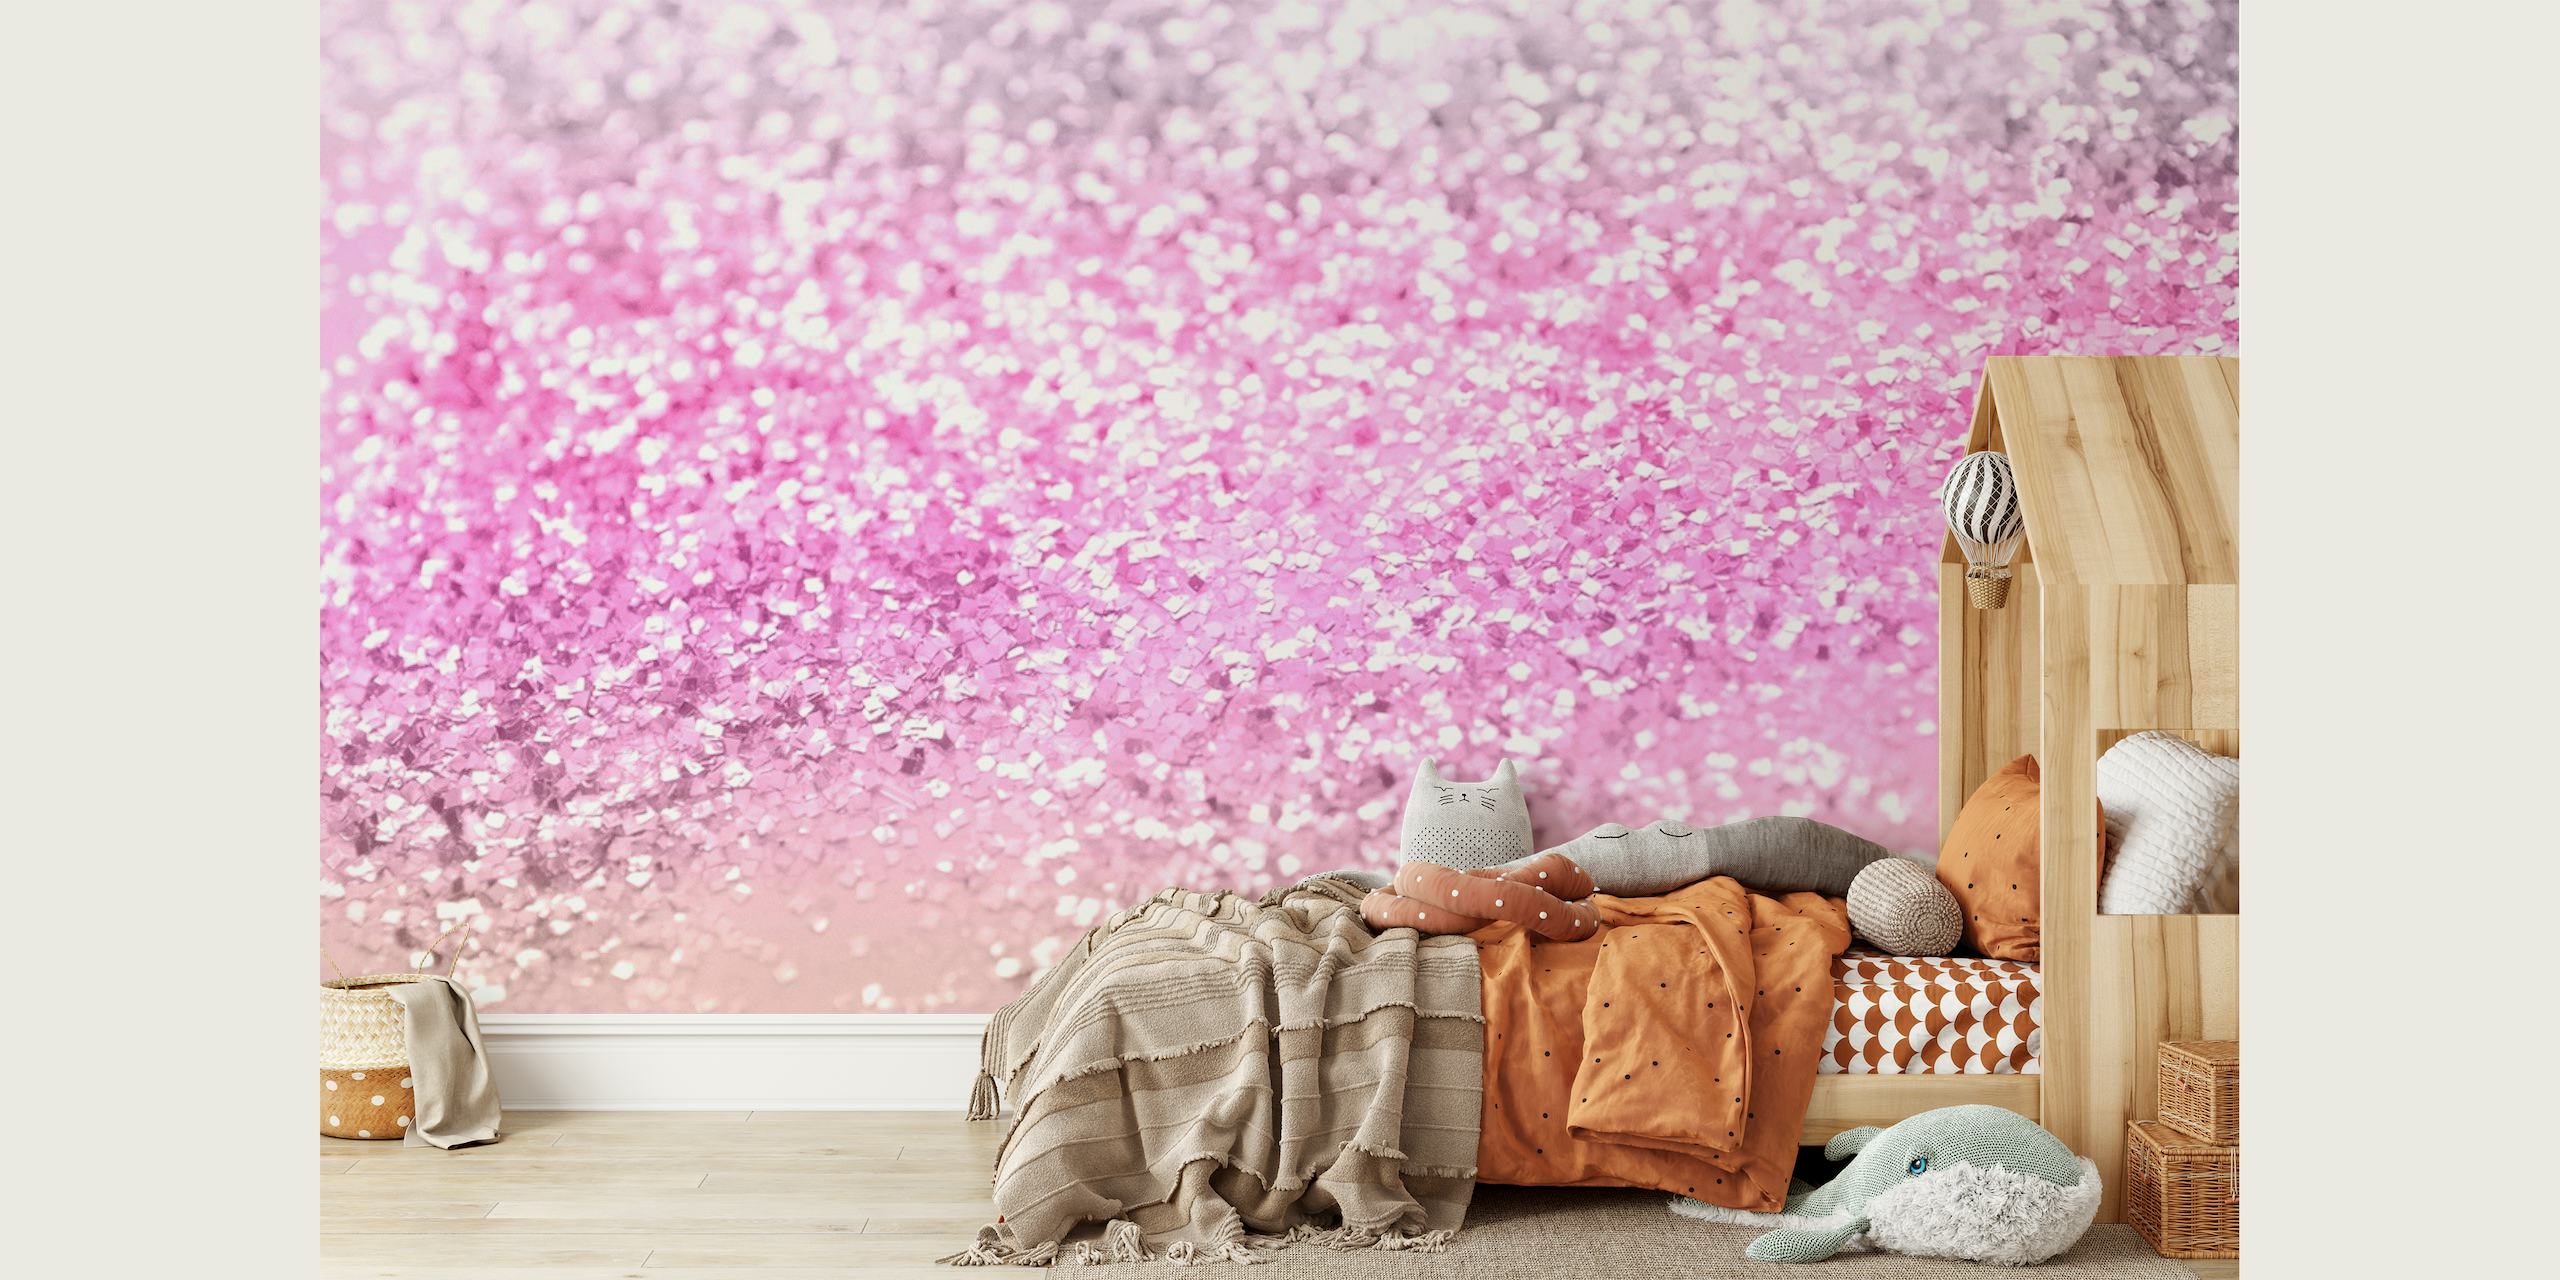 Vægmaleri med glittergradient i pink og sølv til et magisk rumtema